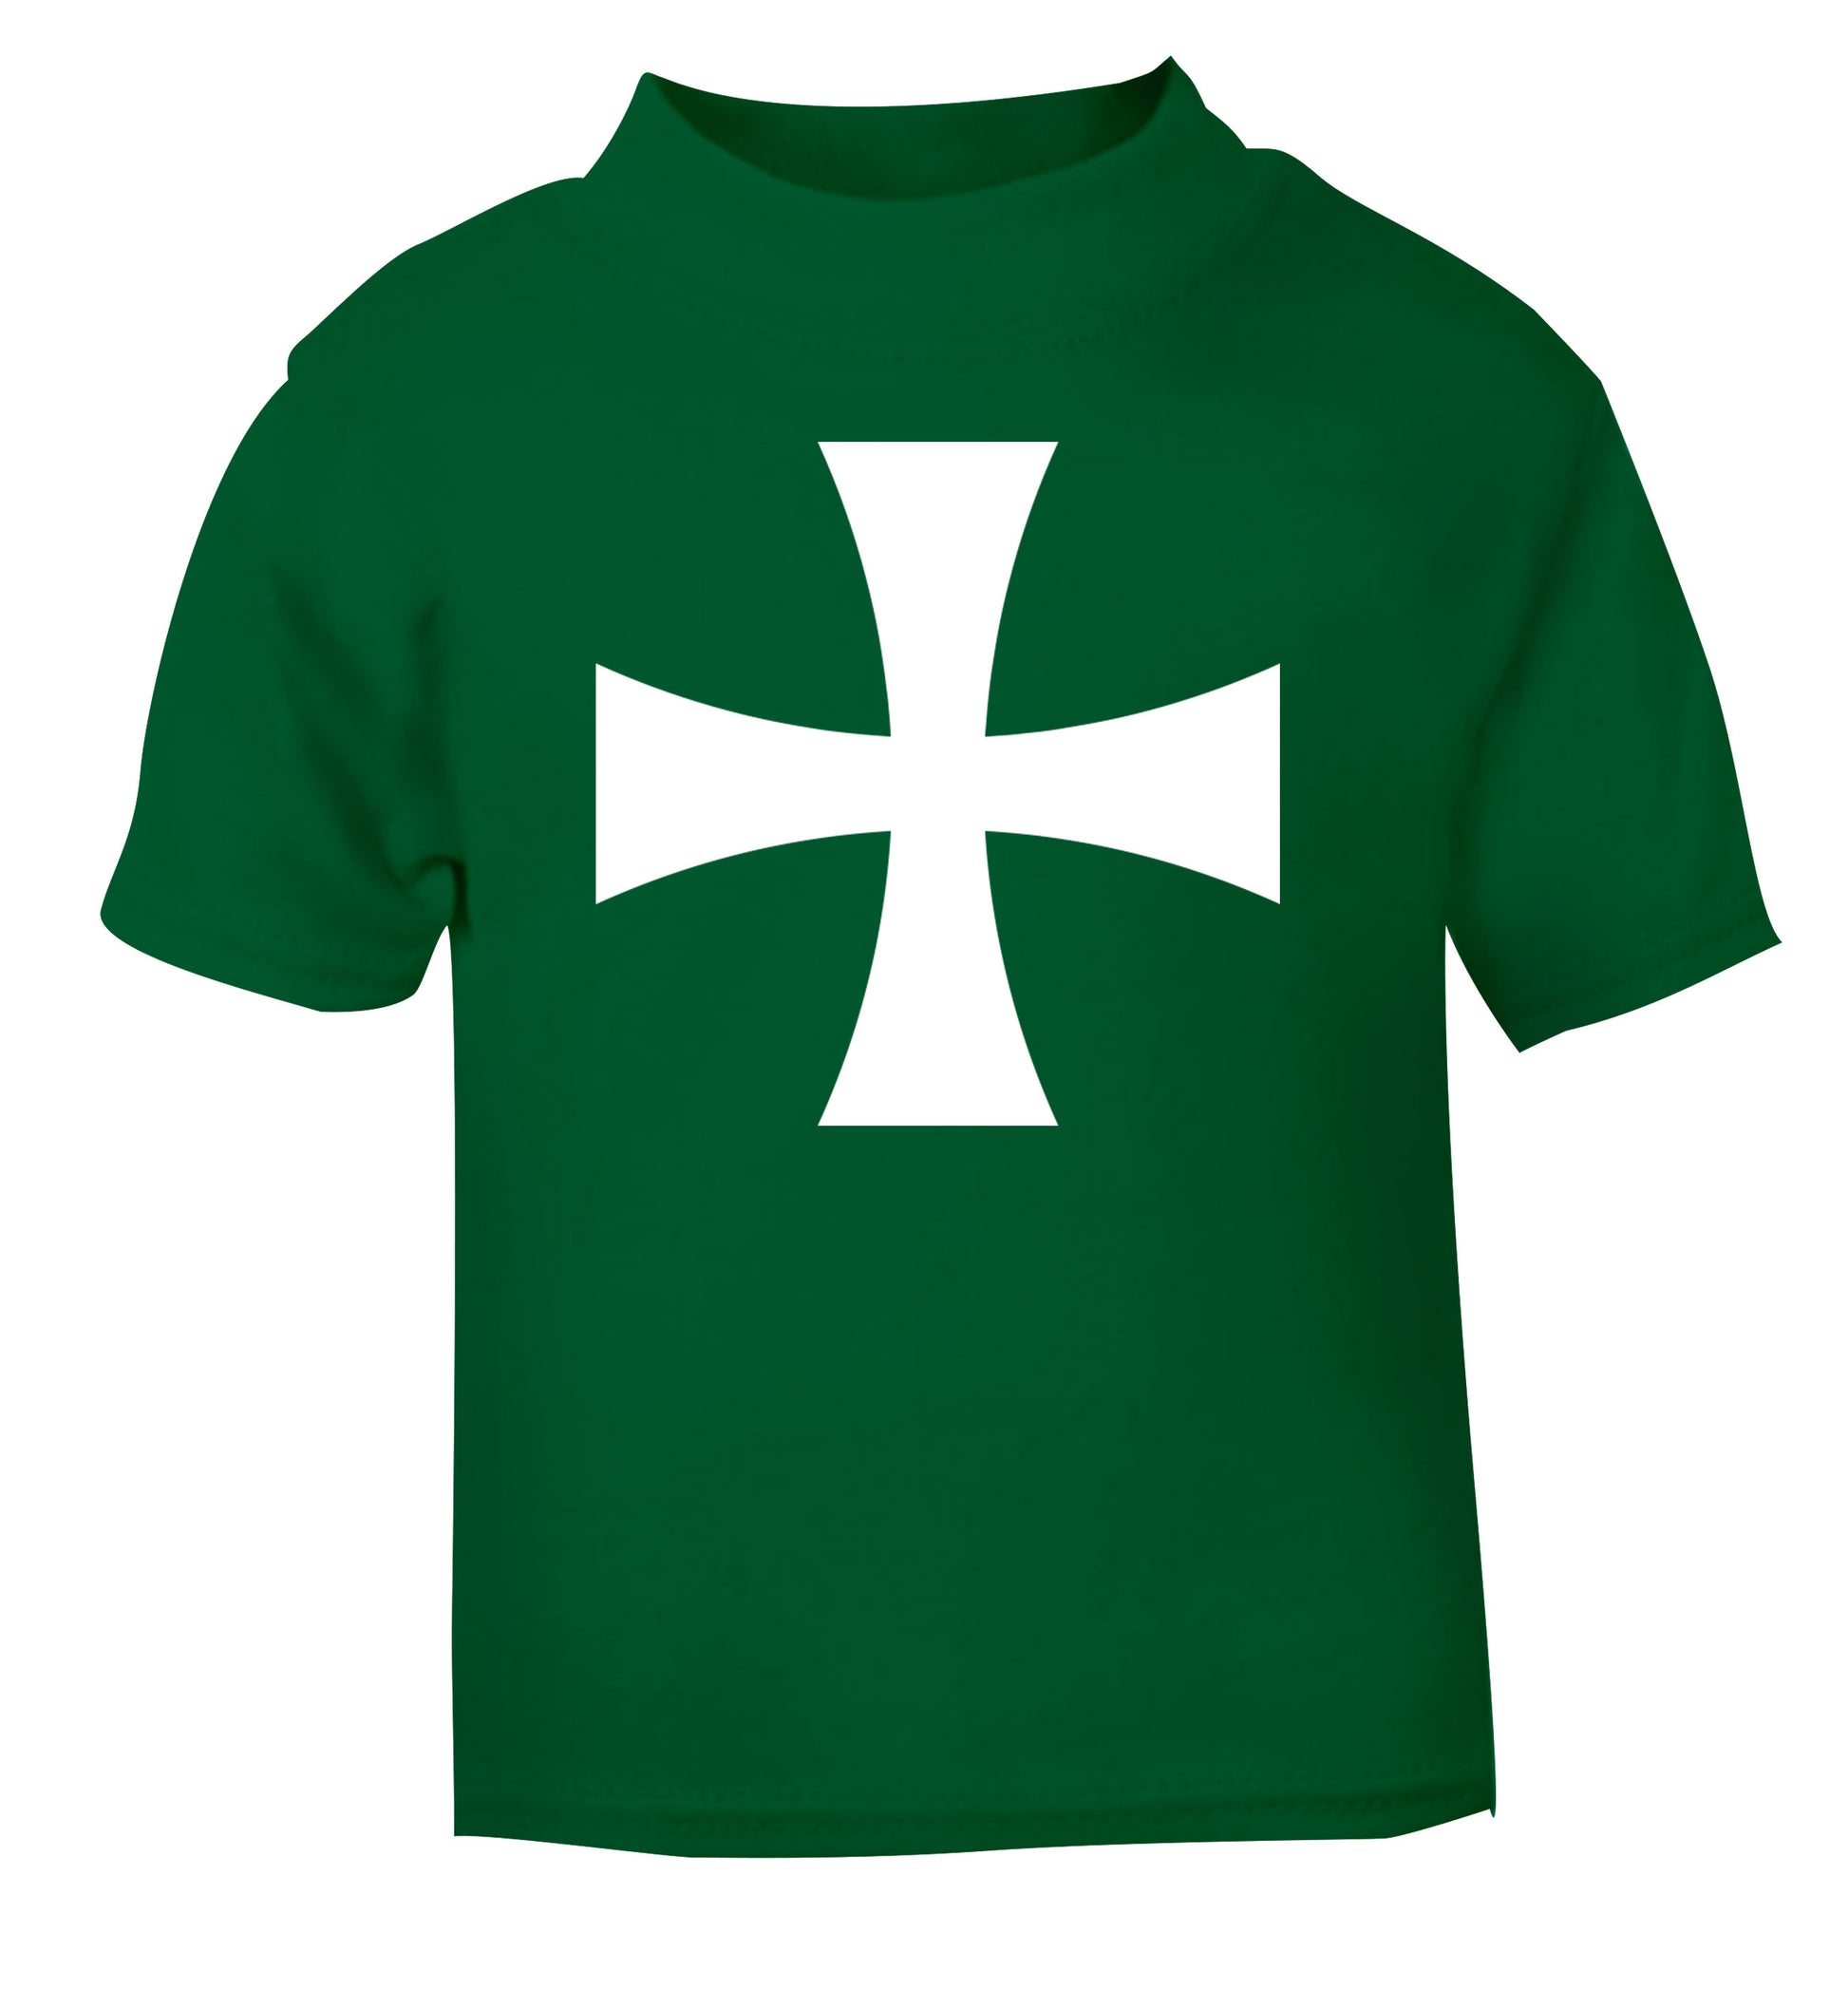 Knights Templar cross green Baby Toddler Tshirt 2 Years